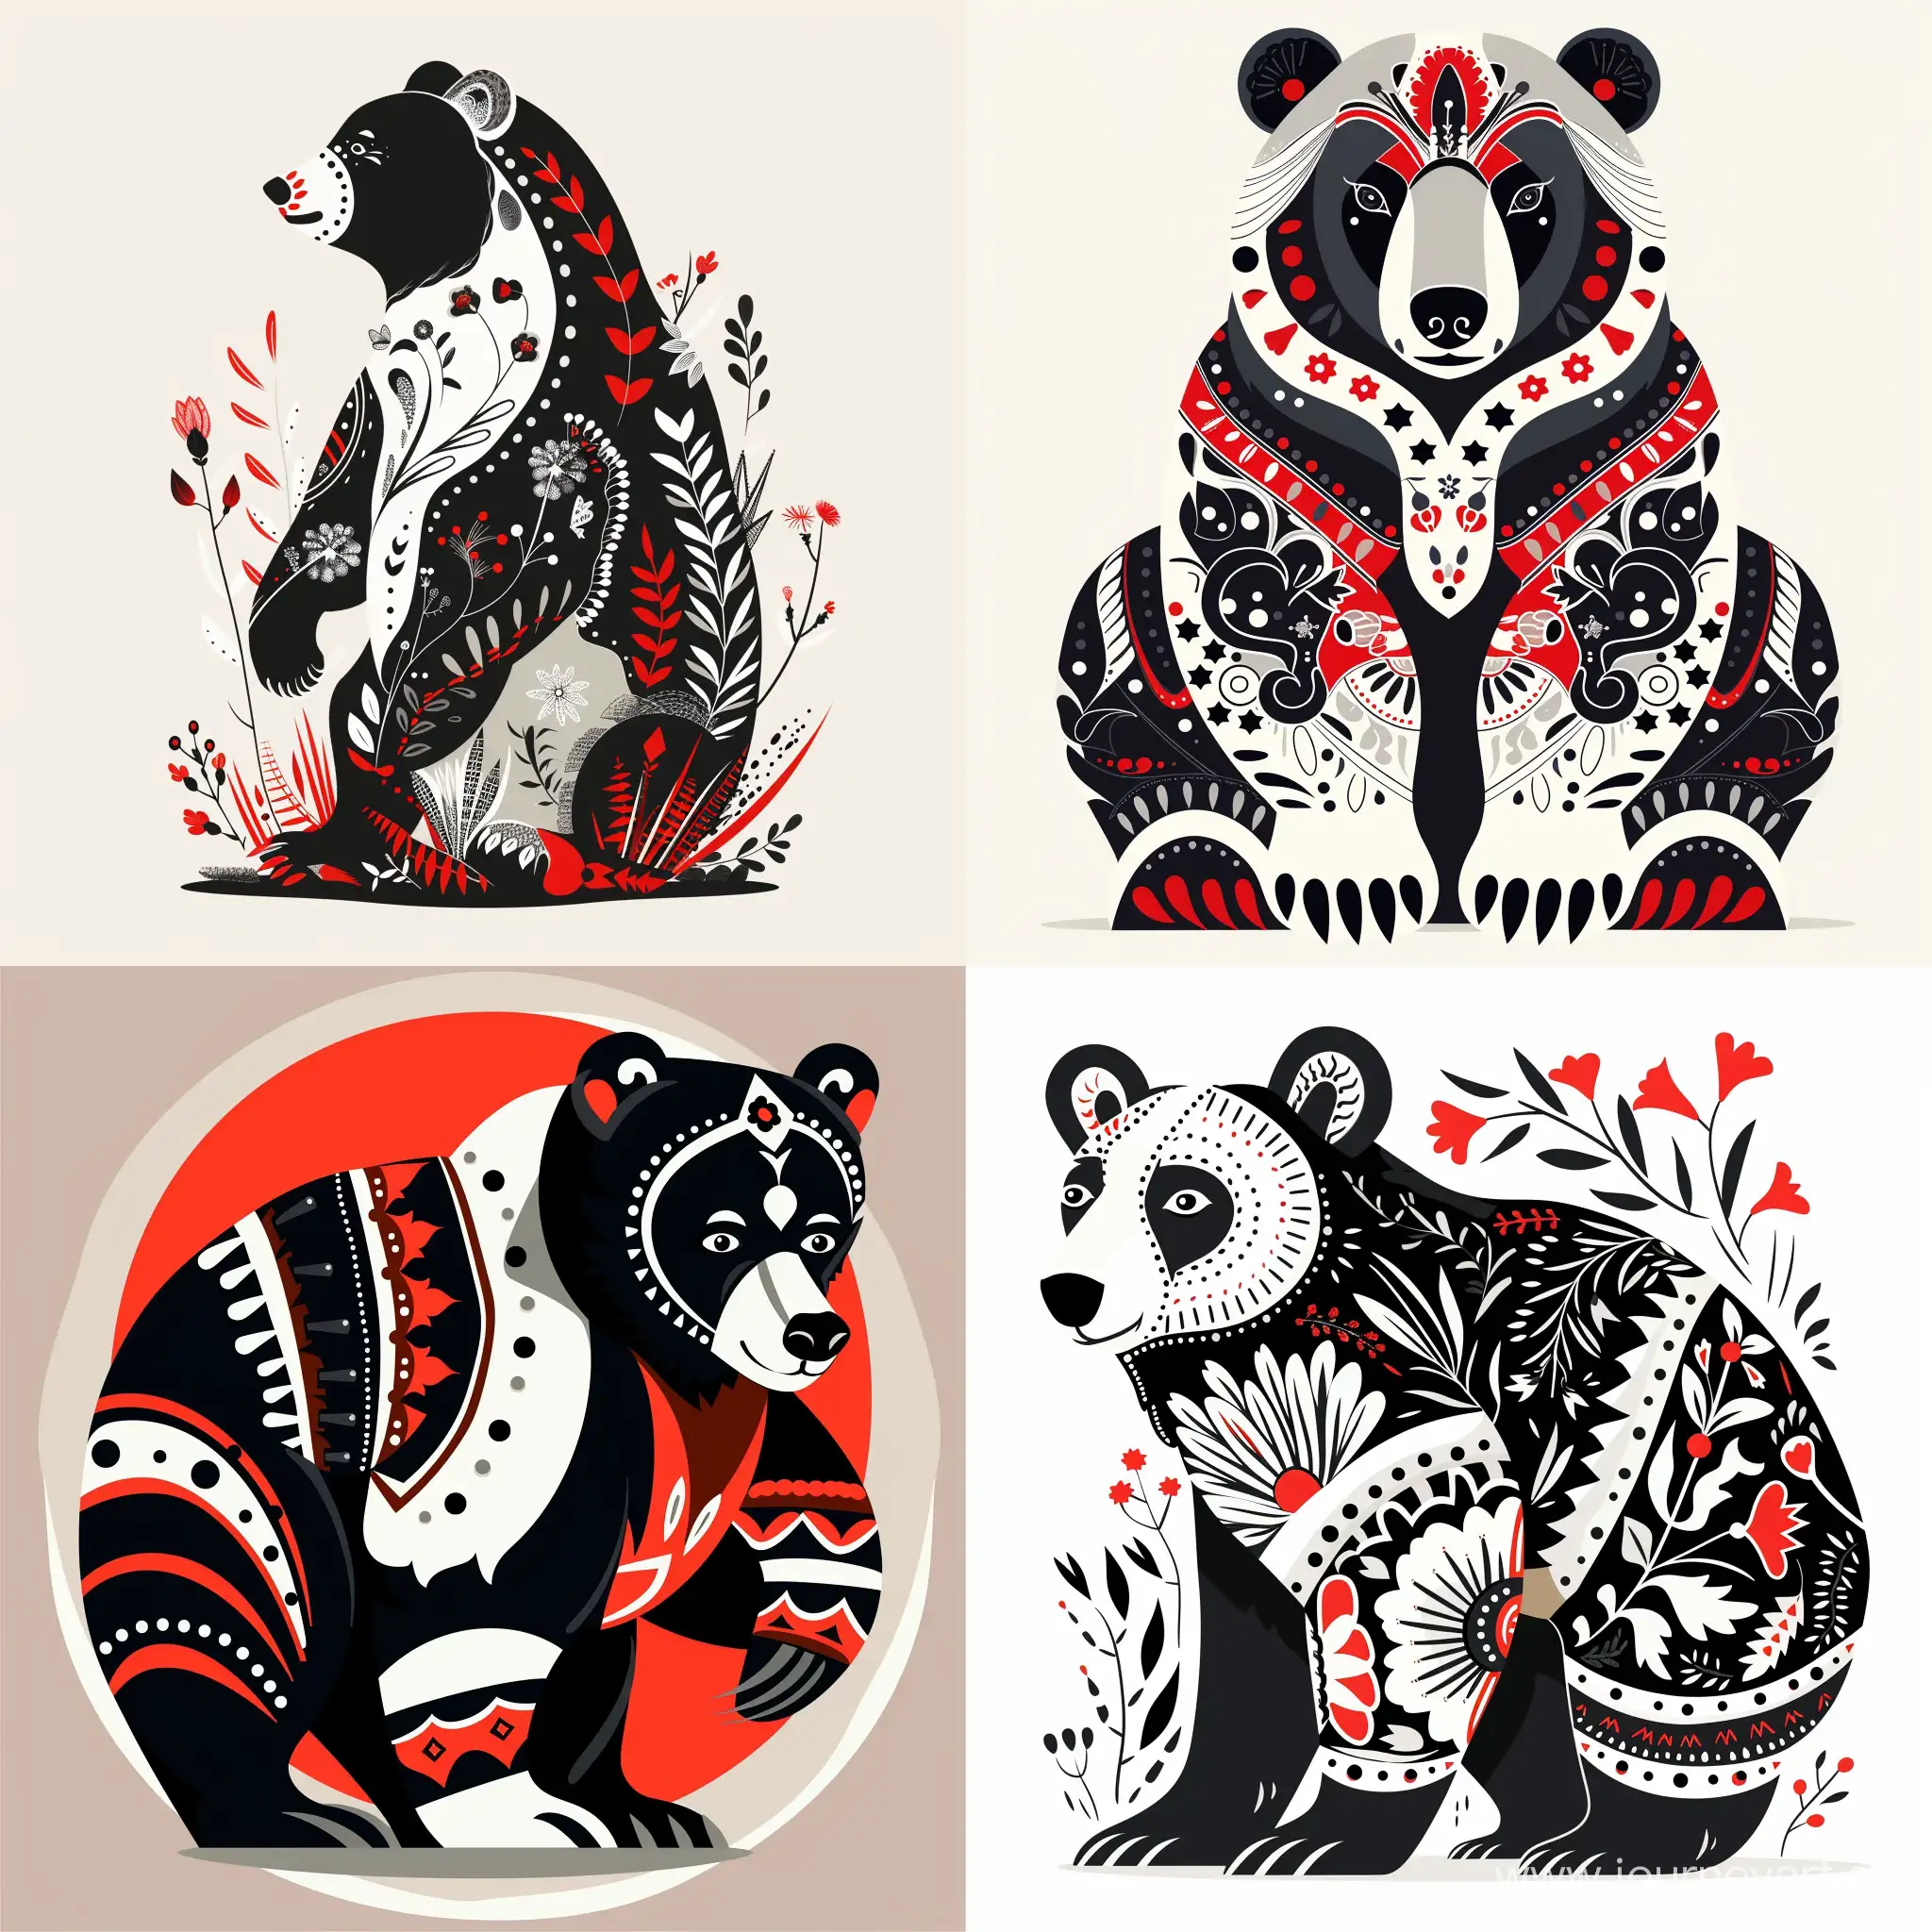 Russian-Folk-Style-Bear-Tshirt-Design-in-Minimalistic-Vector-Illustration